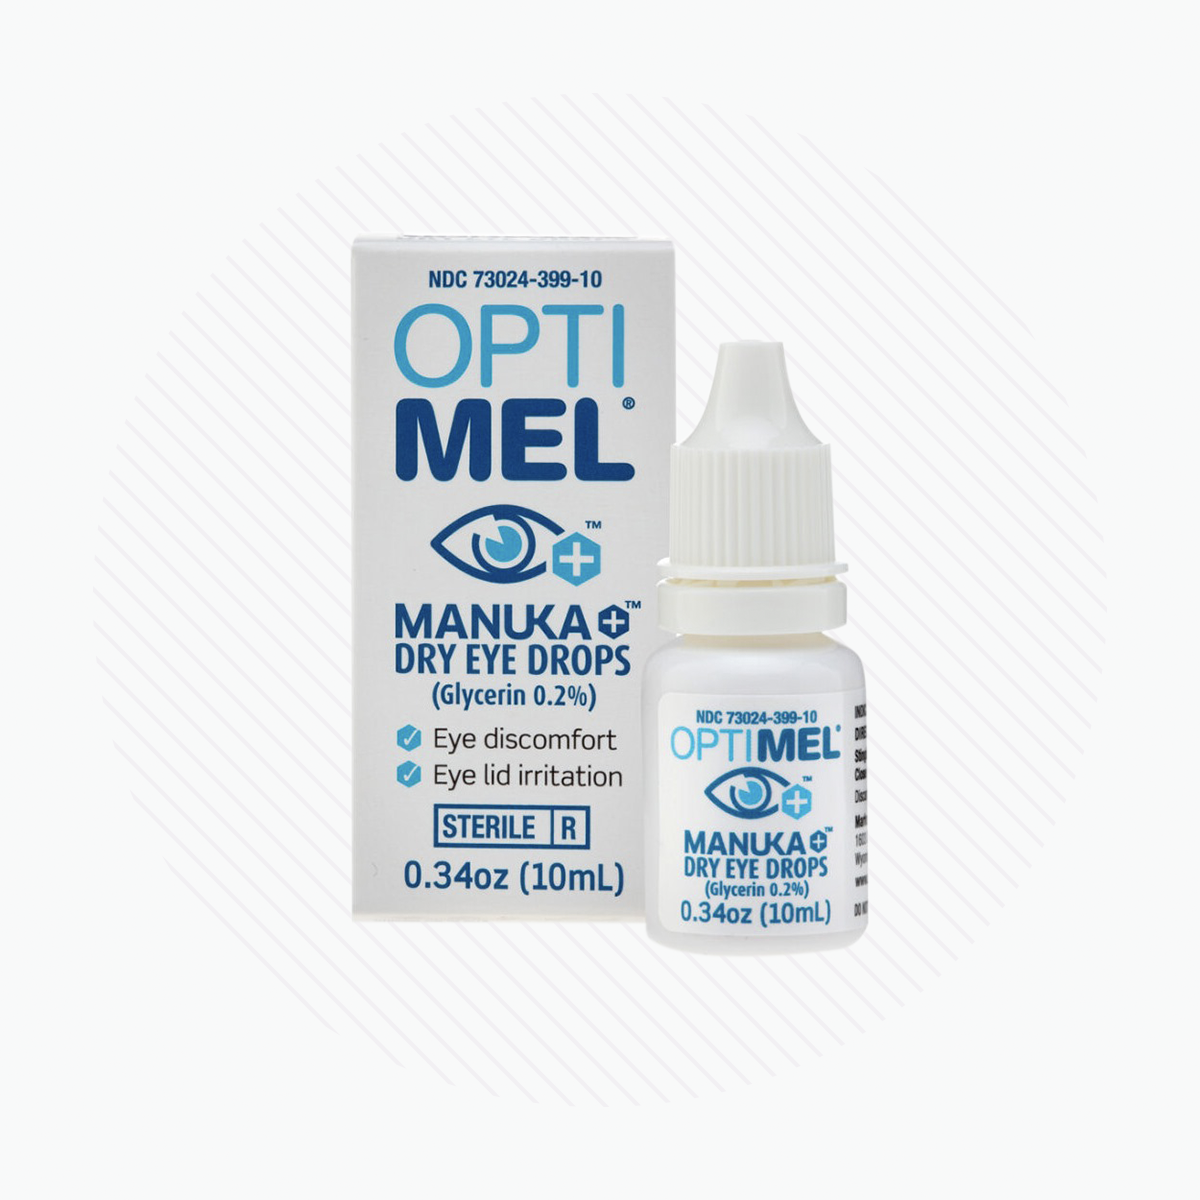 Optimel Manuka Dry Eye Drops 0.2 %, 0.34 oz (10mL Bottle)